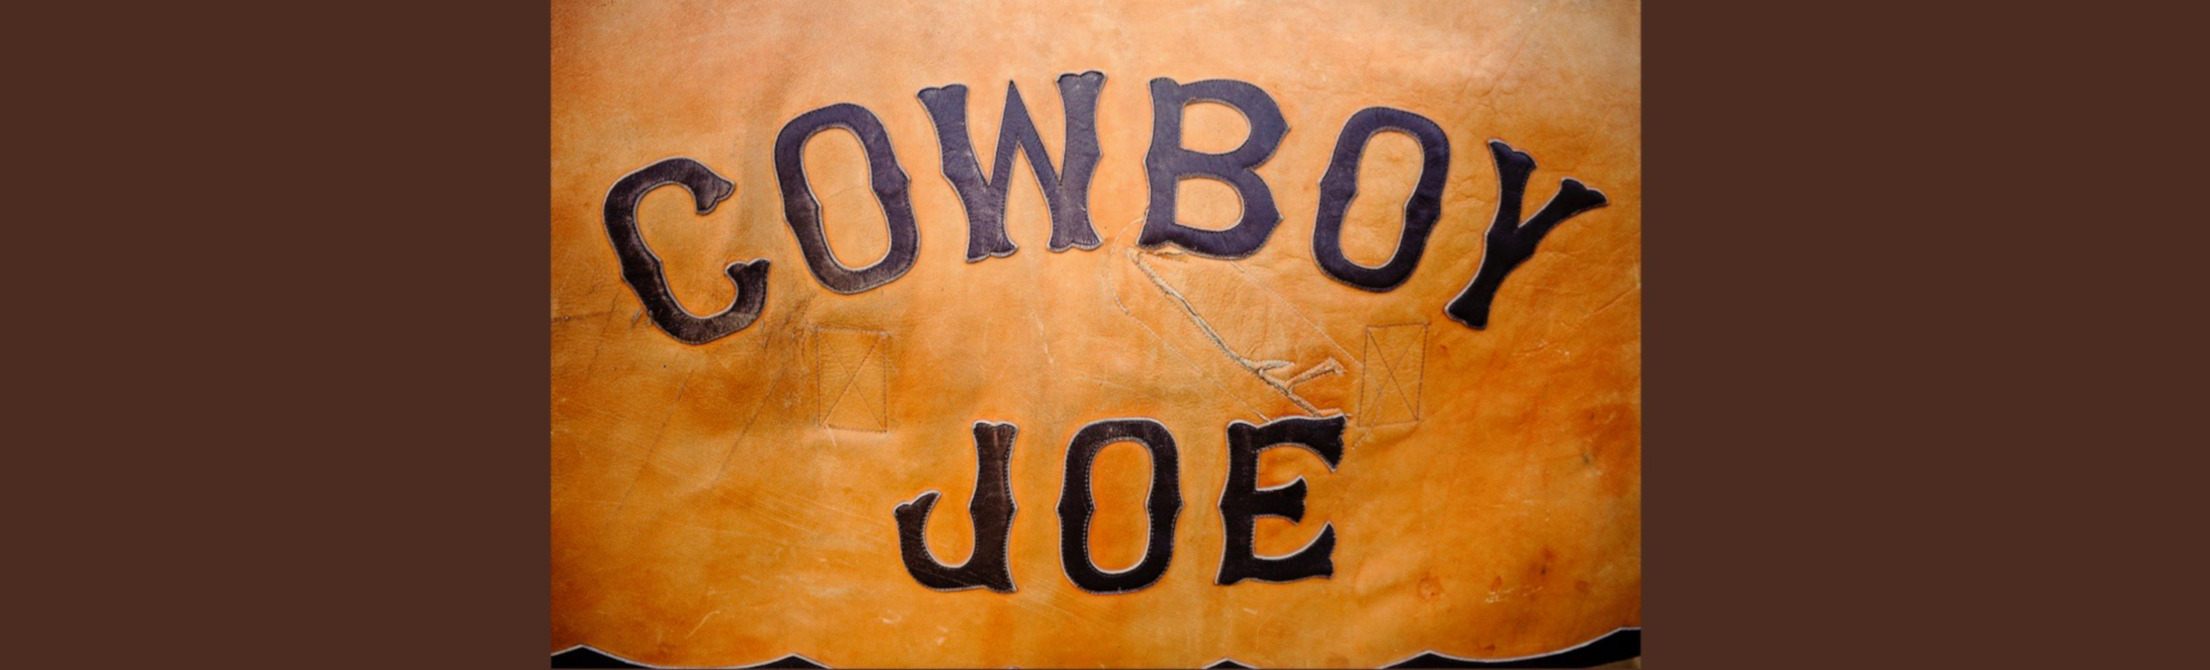 Cowboy Joe blanket